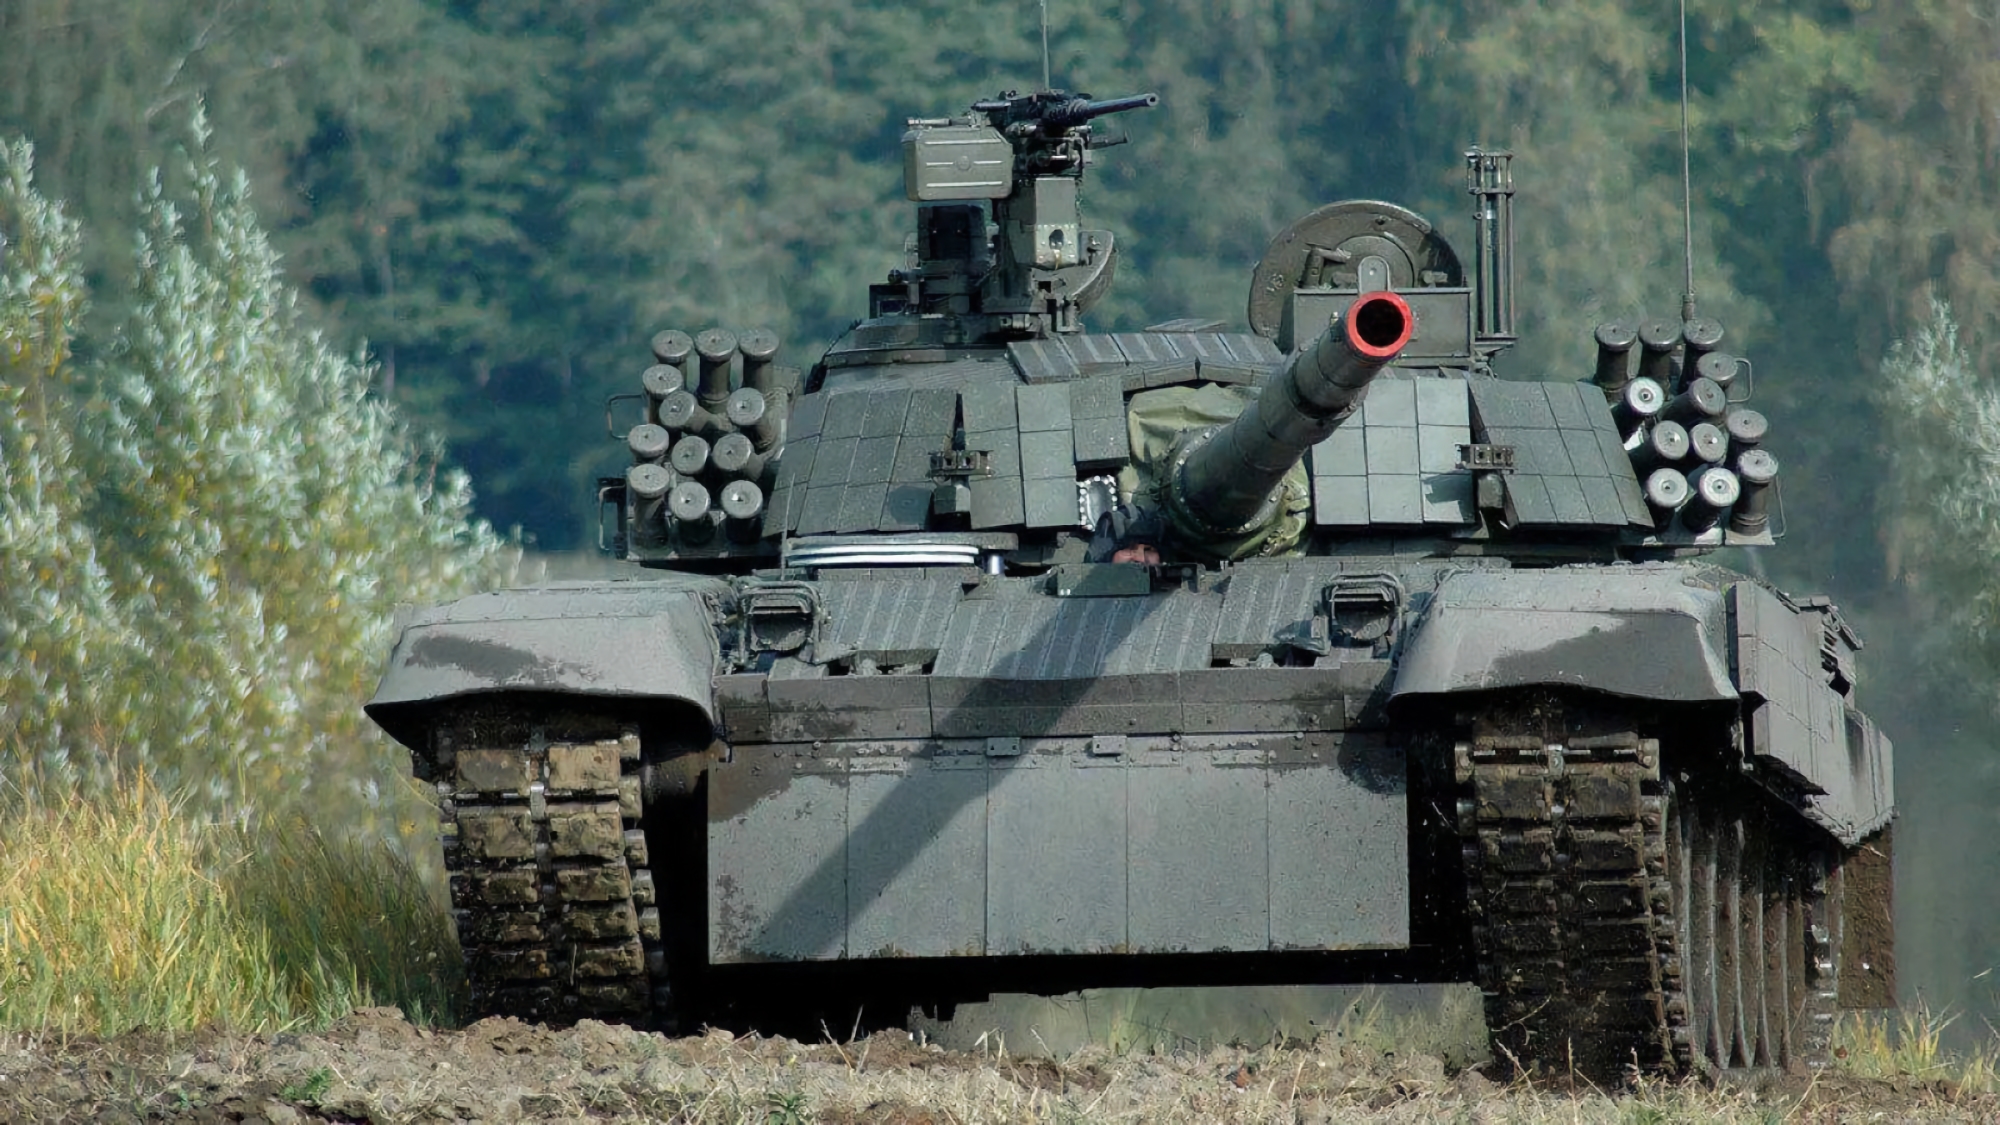 Ukrainian crews already undergoing training on PT-91 Twardy tanks in Poland